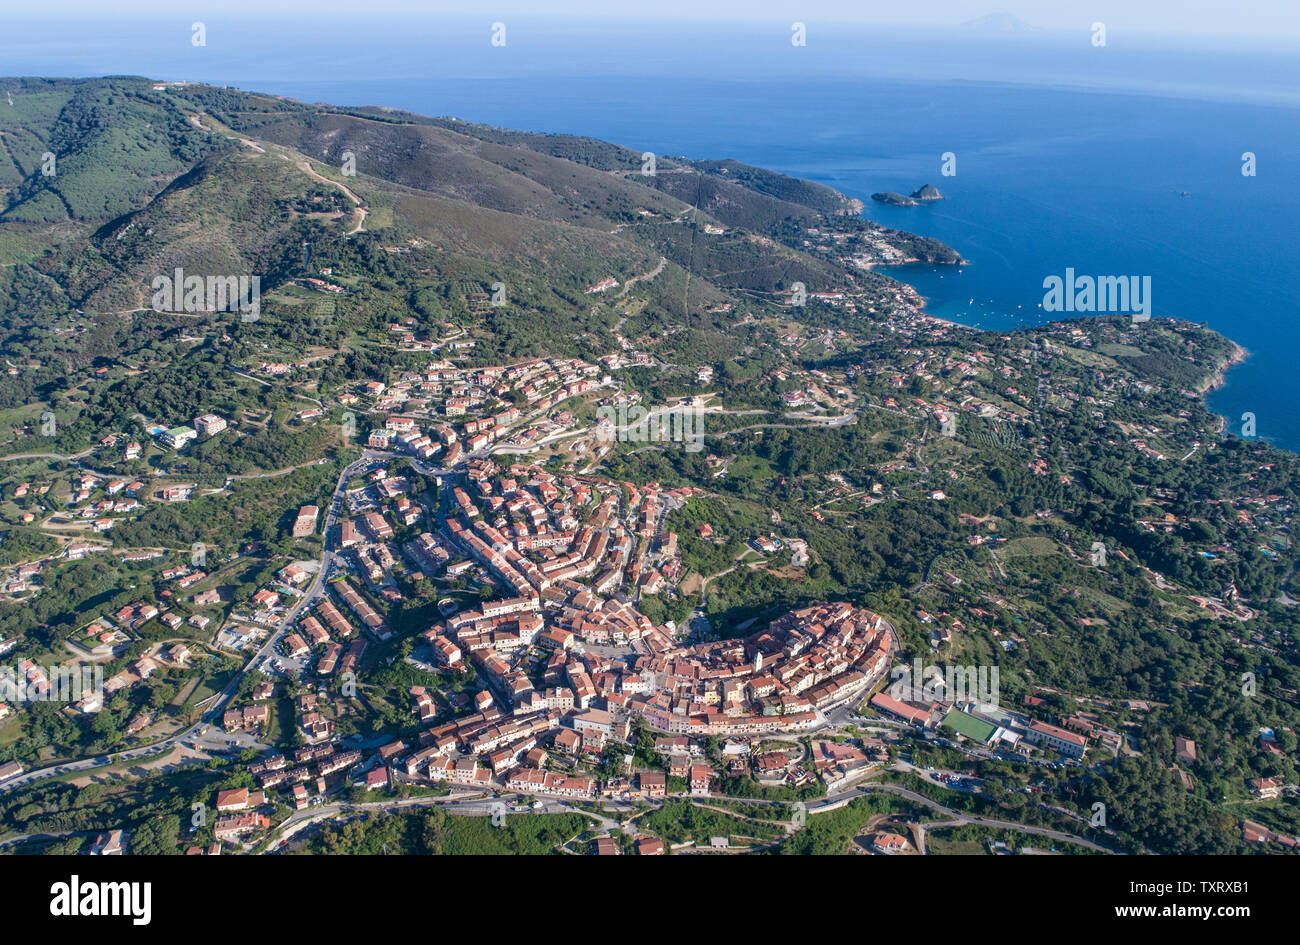 Insel Elba, Panoramablick auf das Dorf von Capoliveri, Luftbild. Toskana, Italien Stockfoto